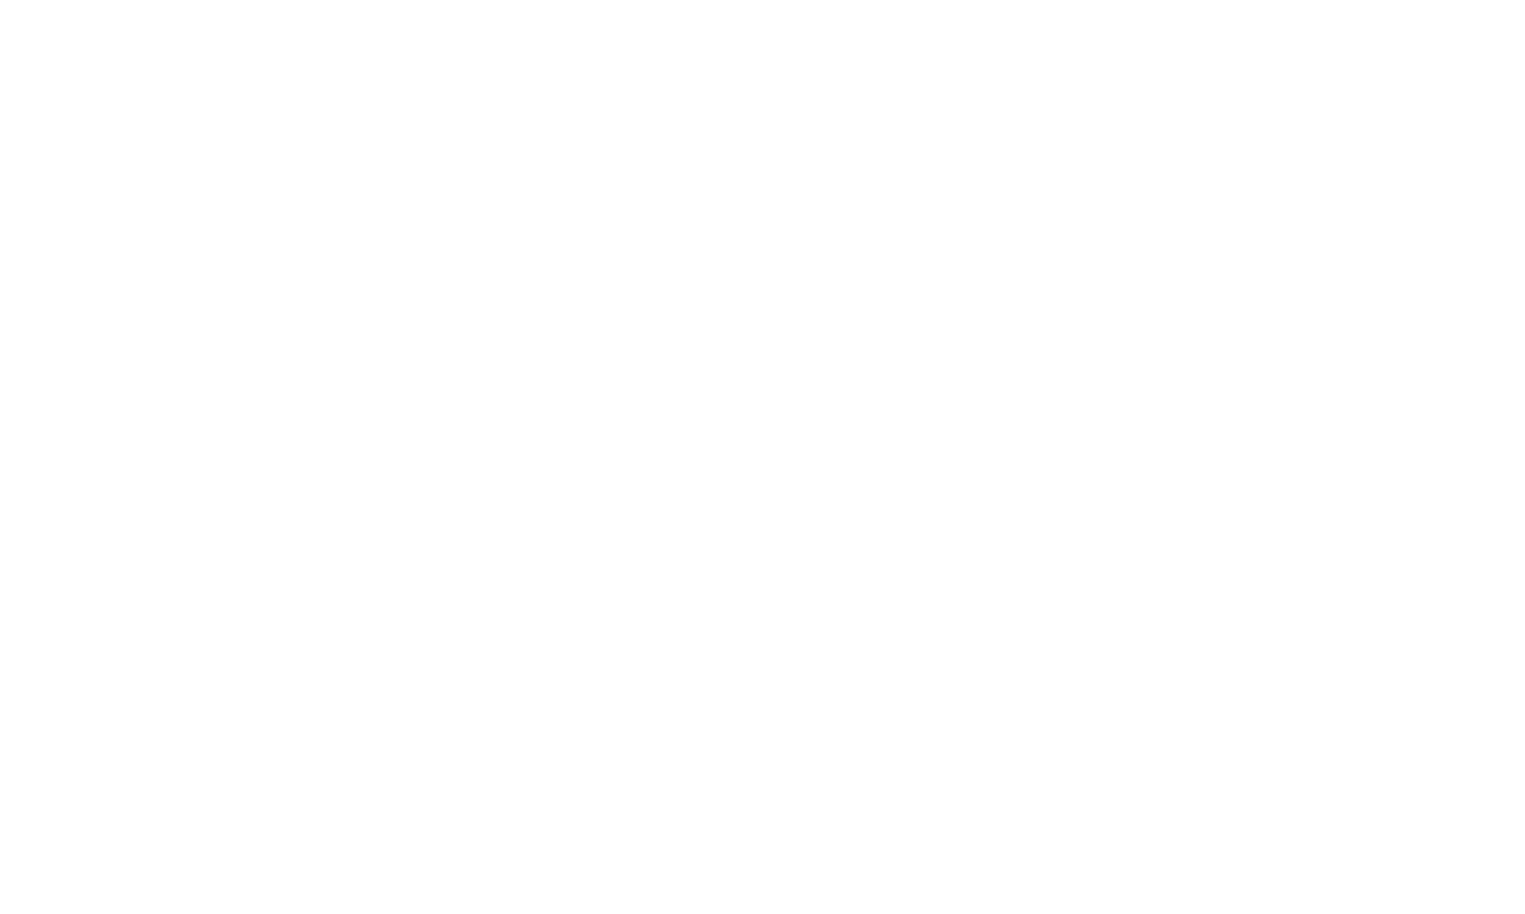 Empresas Copec logo pour fonds sombres (PNG transparent)